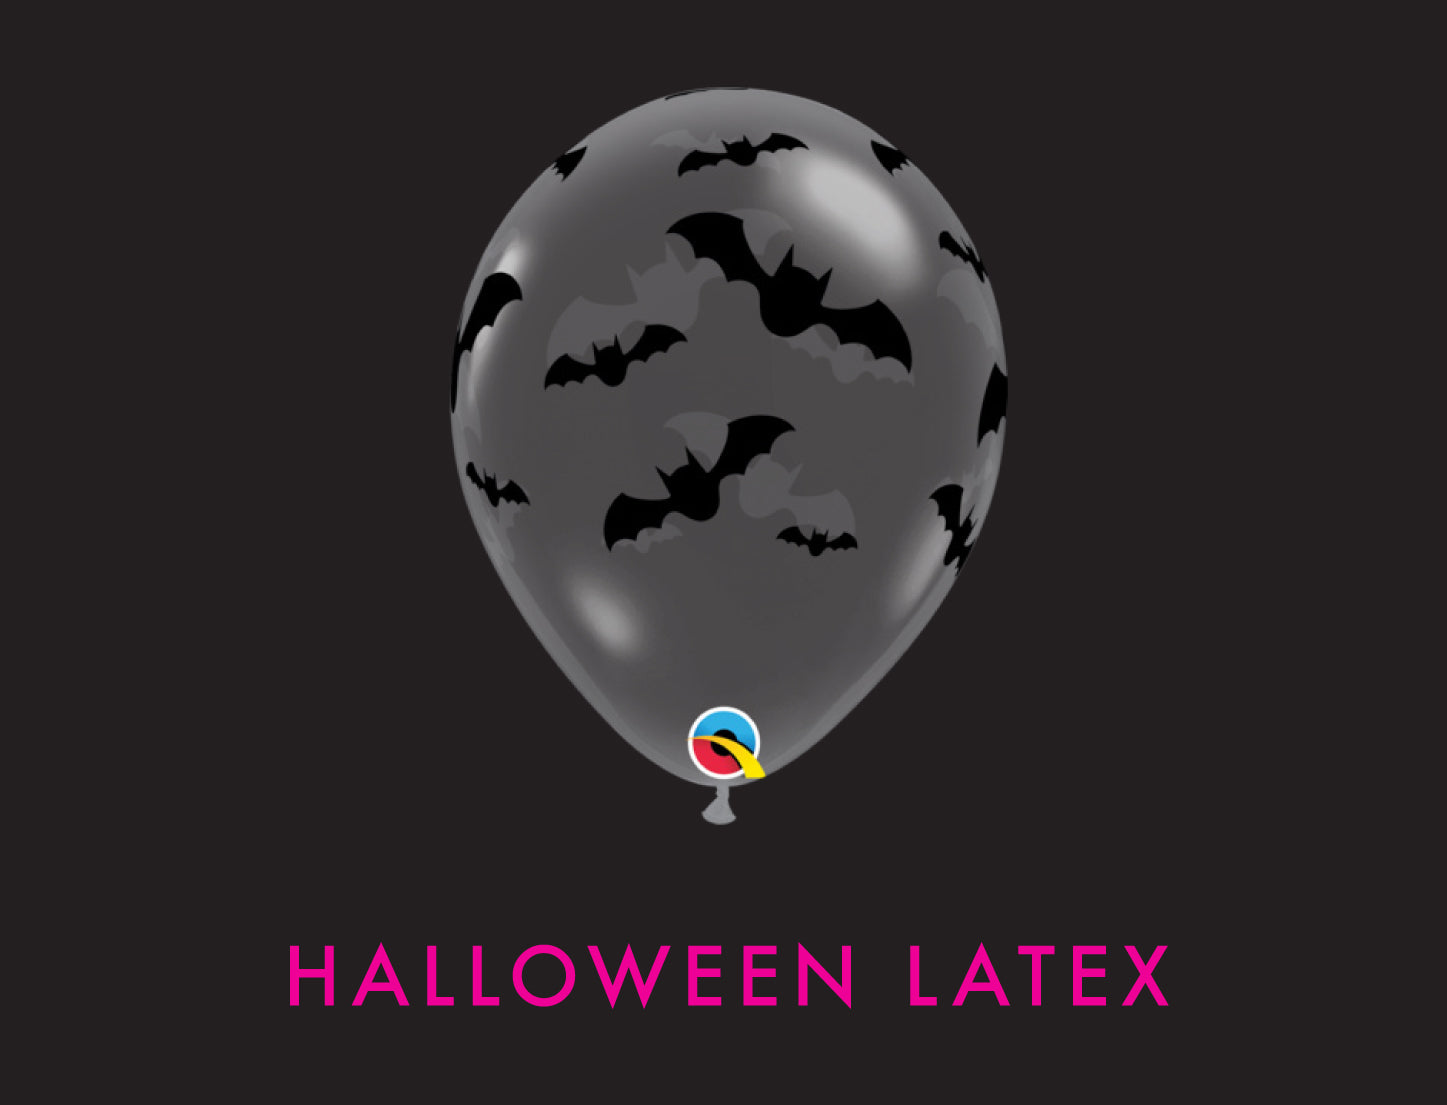 Halloween Latex Balloons